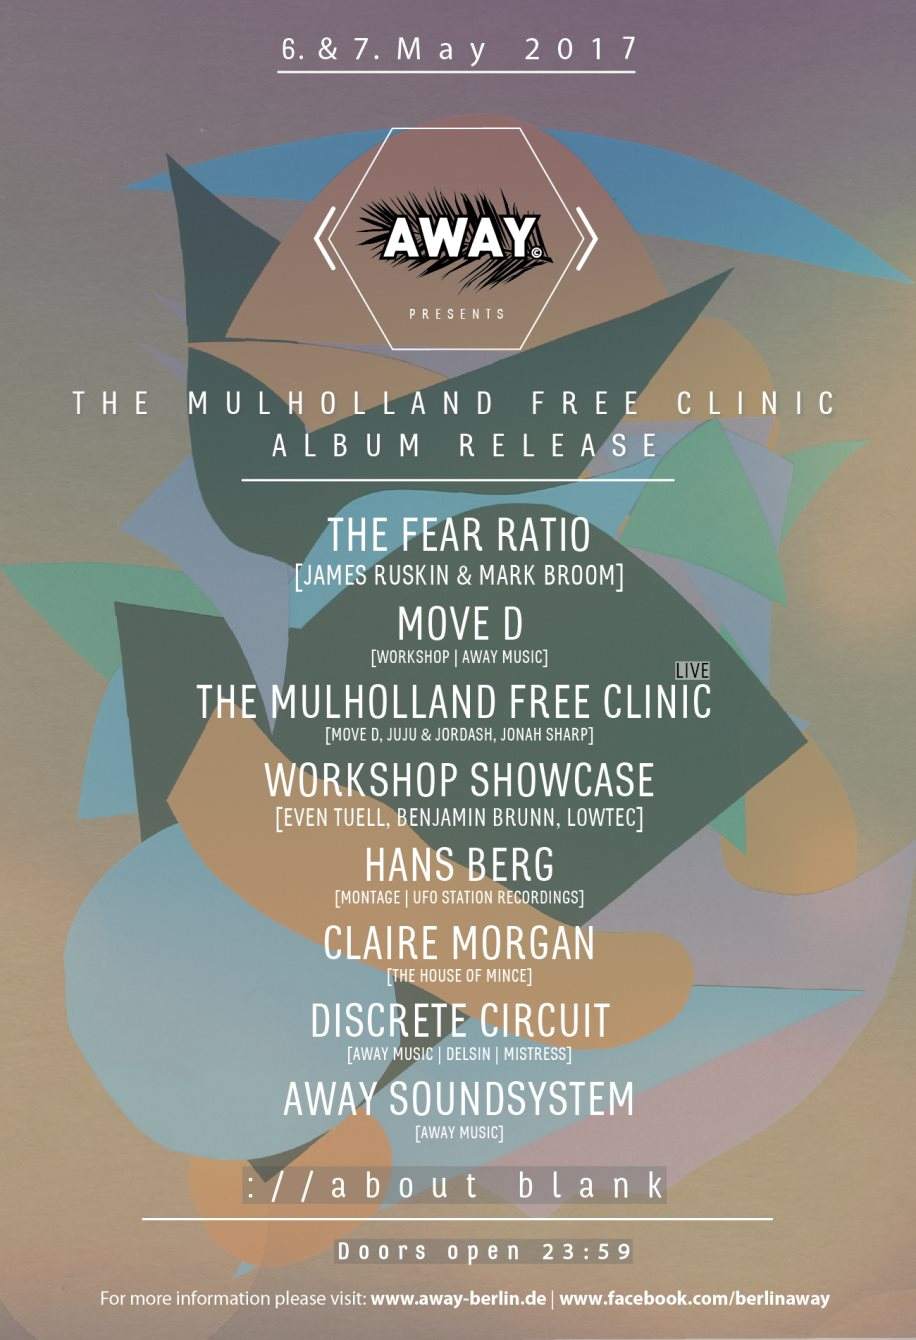 Away presents The Mulholland Free Clinic Album Release + James Ruskin & Mark Broom - Página trasera